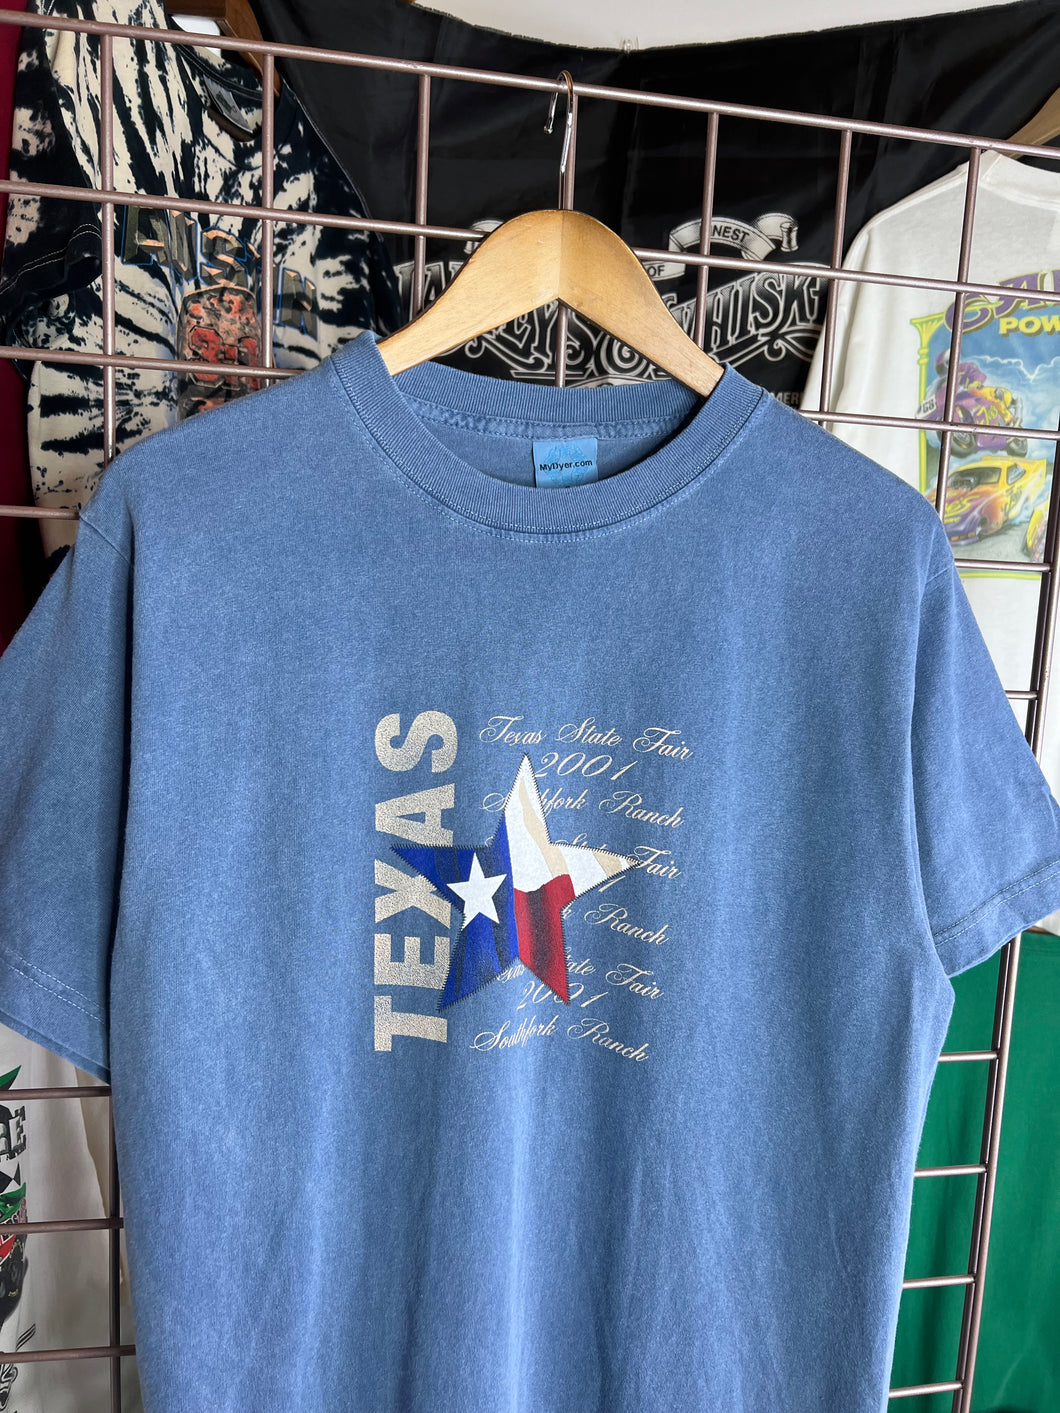 Vintage Texas State Fair Tee (M/L)